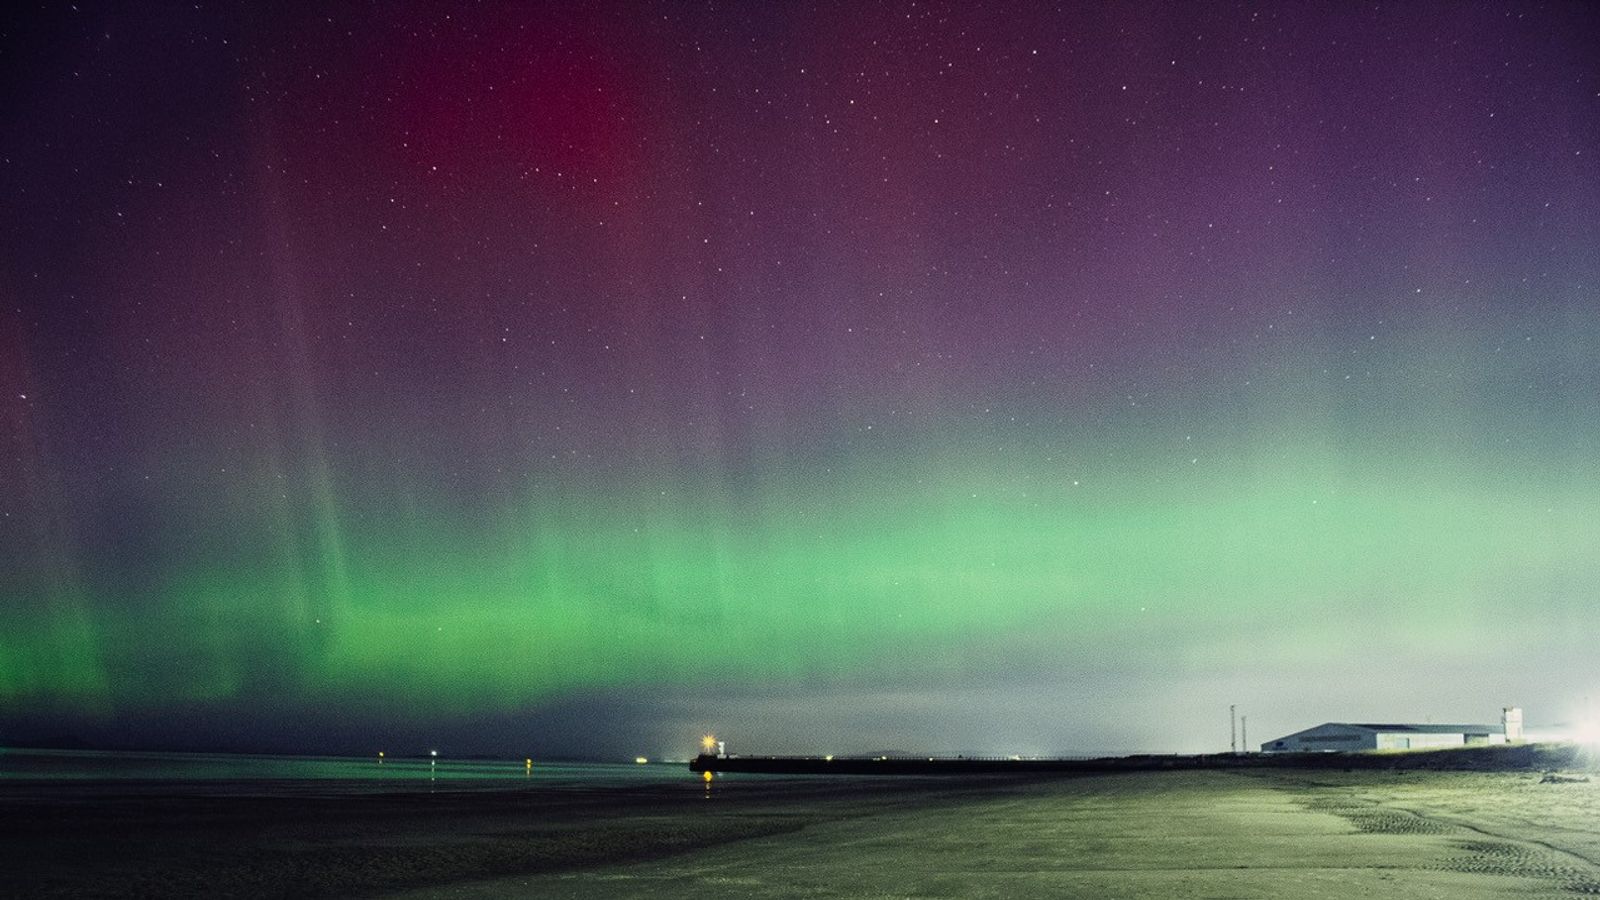 Northern Lights stun sky-gazers - even southern England treated to rare display Aurora